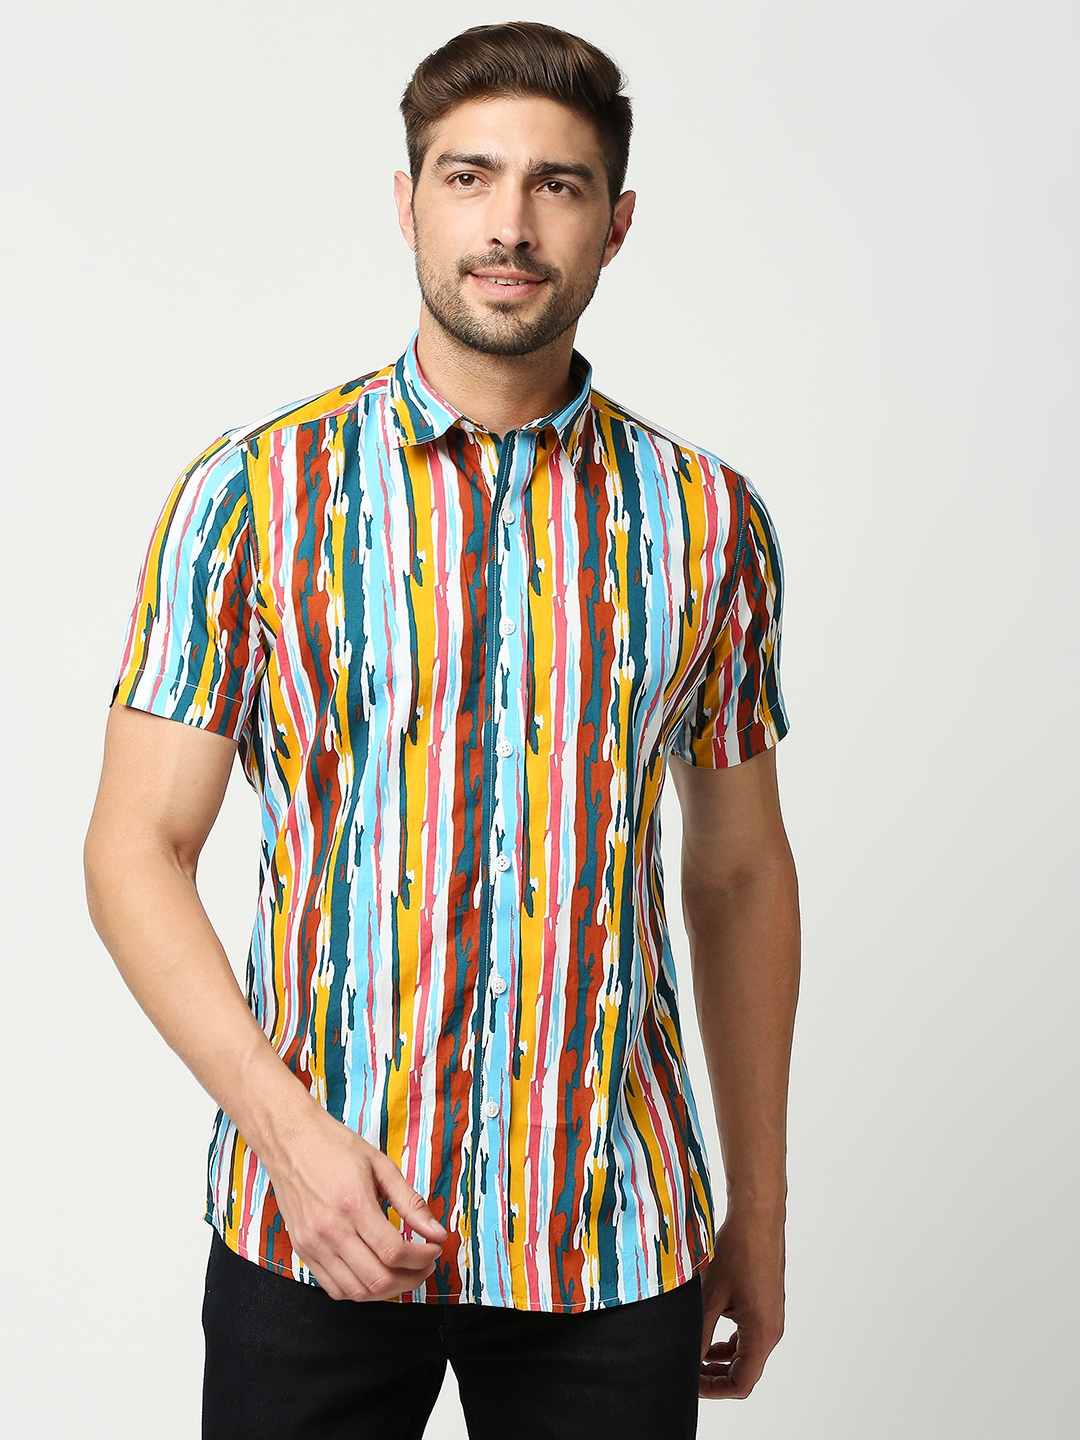 EVOQ | EVOQ's Unique Verticle Striped Multi-colour Printed Half Sleeves Cotton Casual Shirt for Men